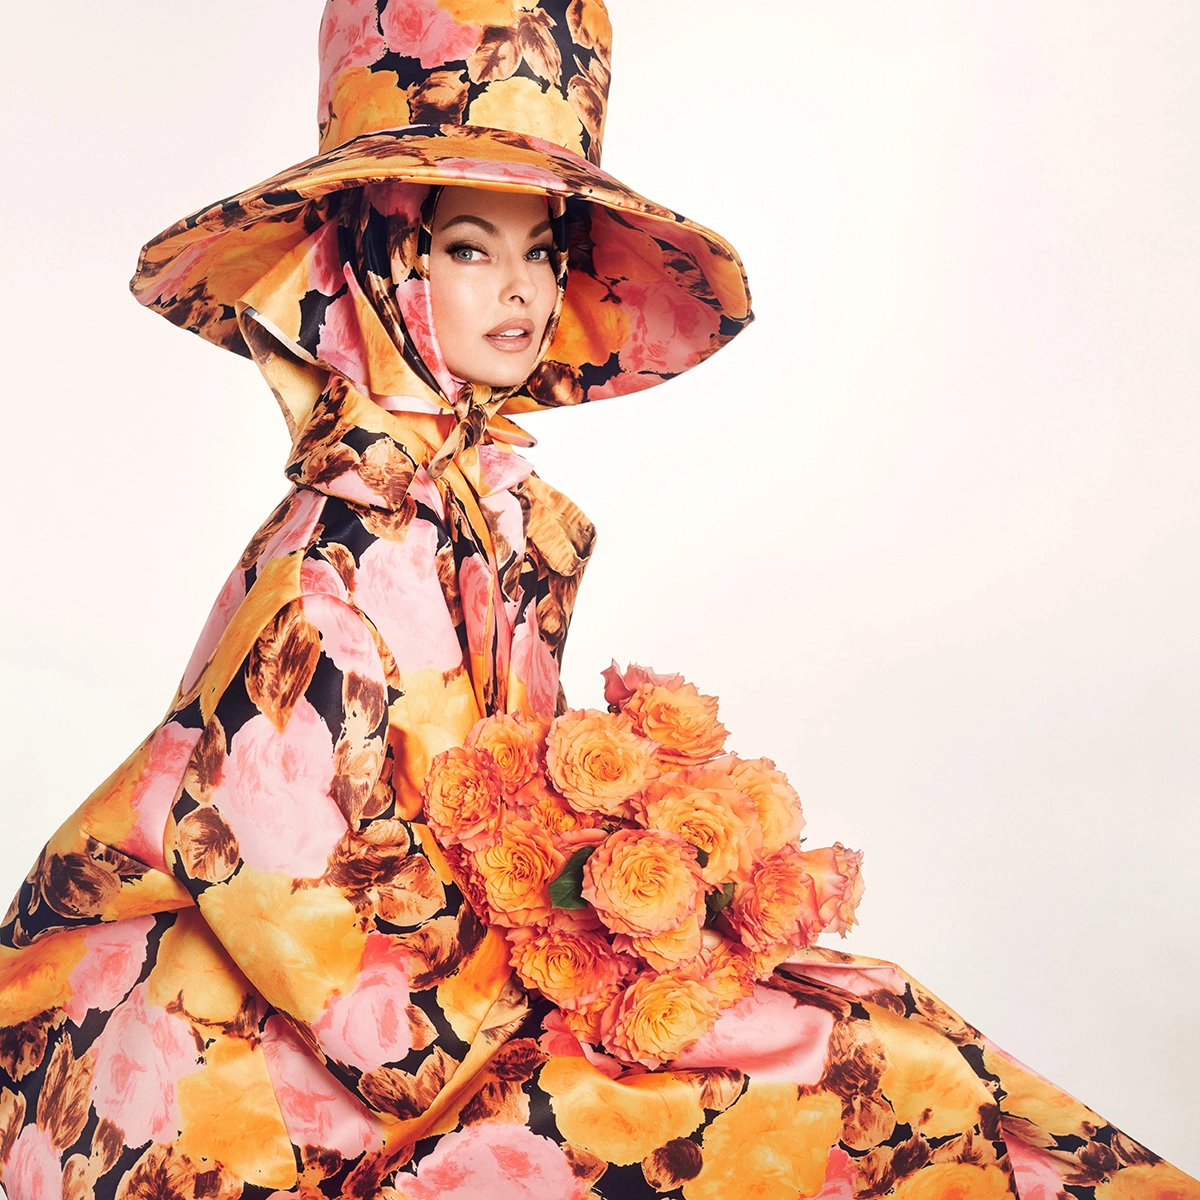 Linda Evangelista covers British Vogue September 2022 by Steven Meisel